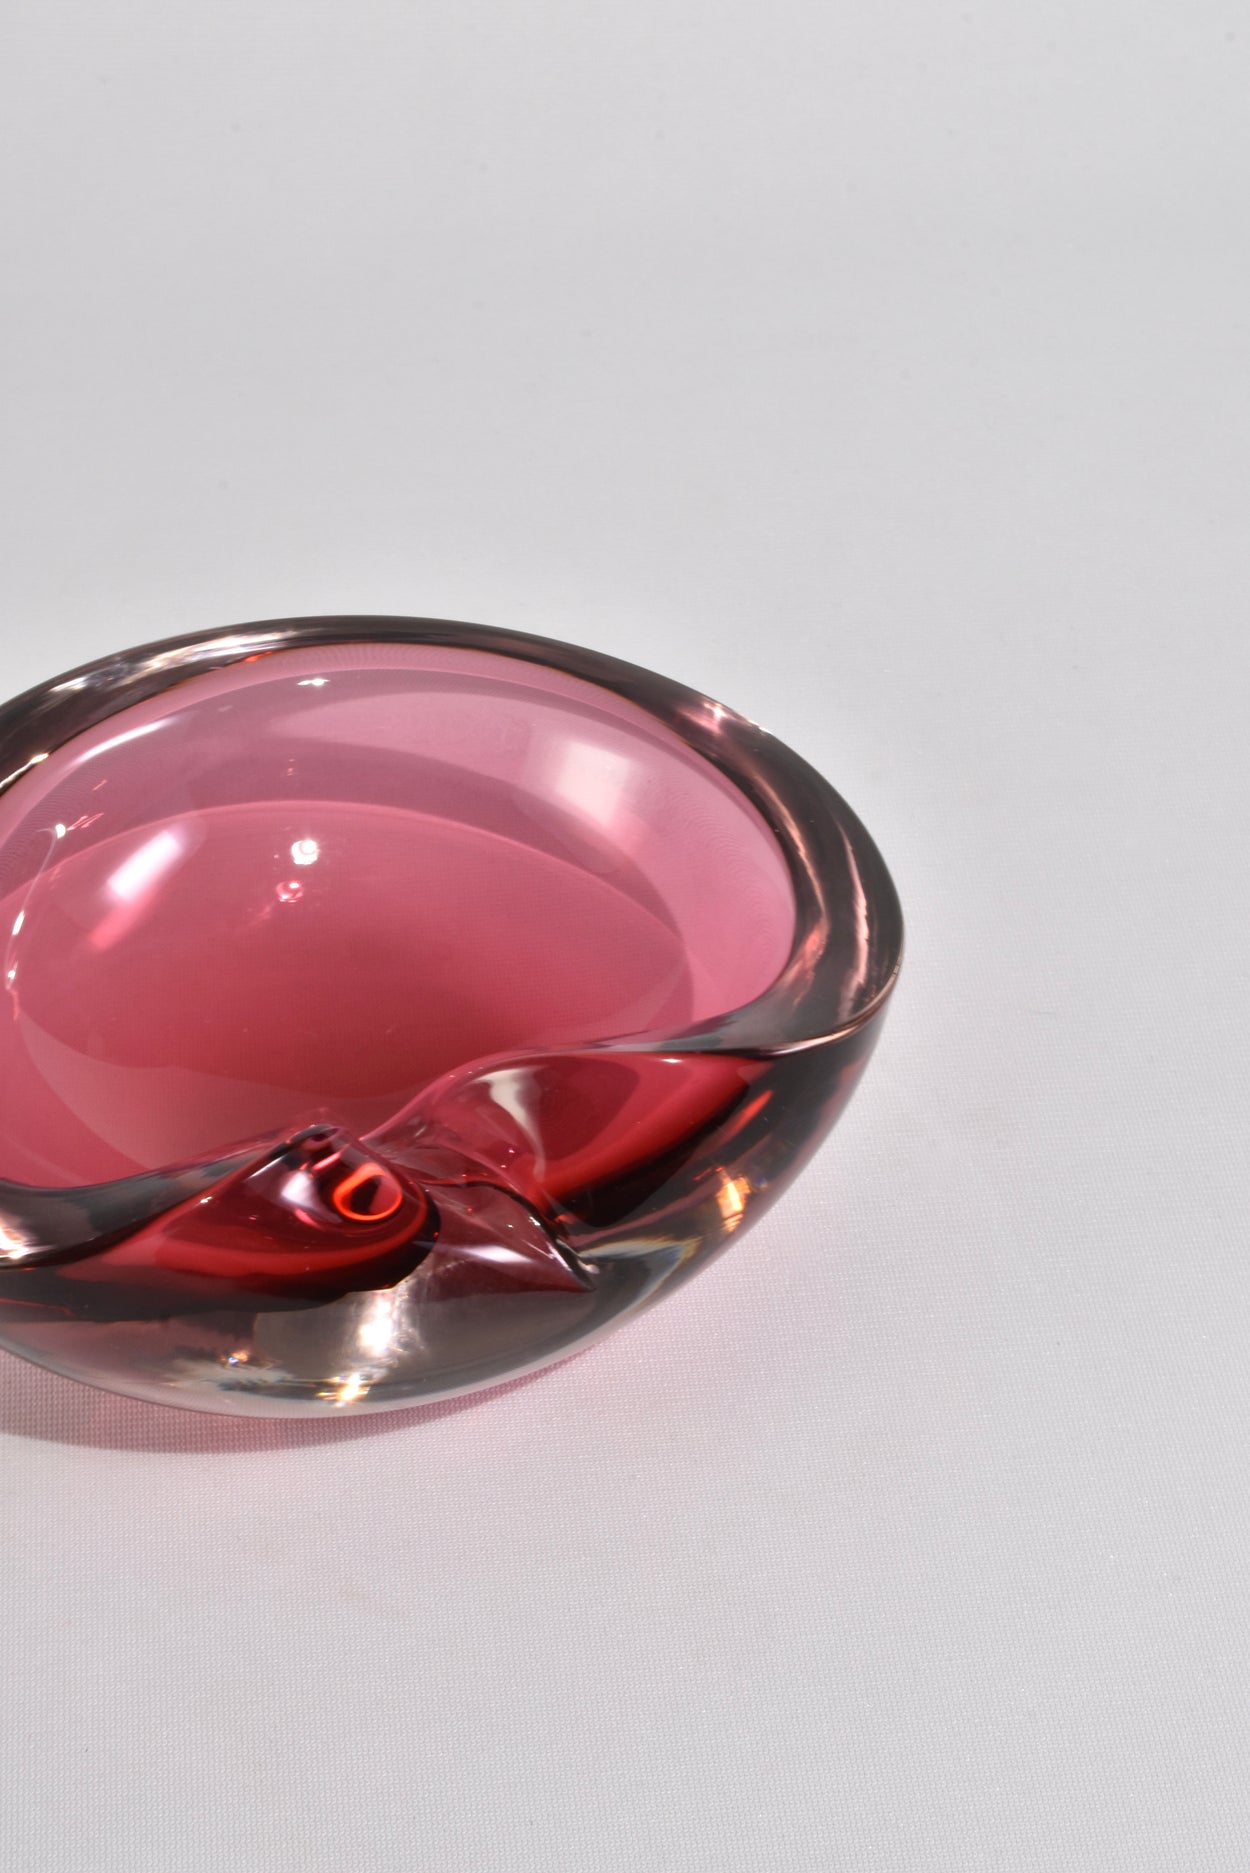 Pink Glass Catchall